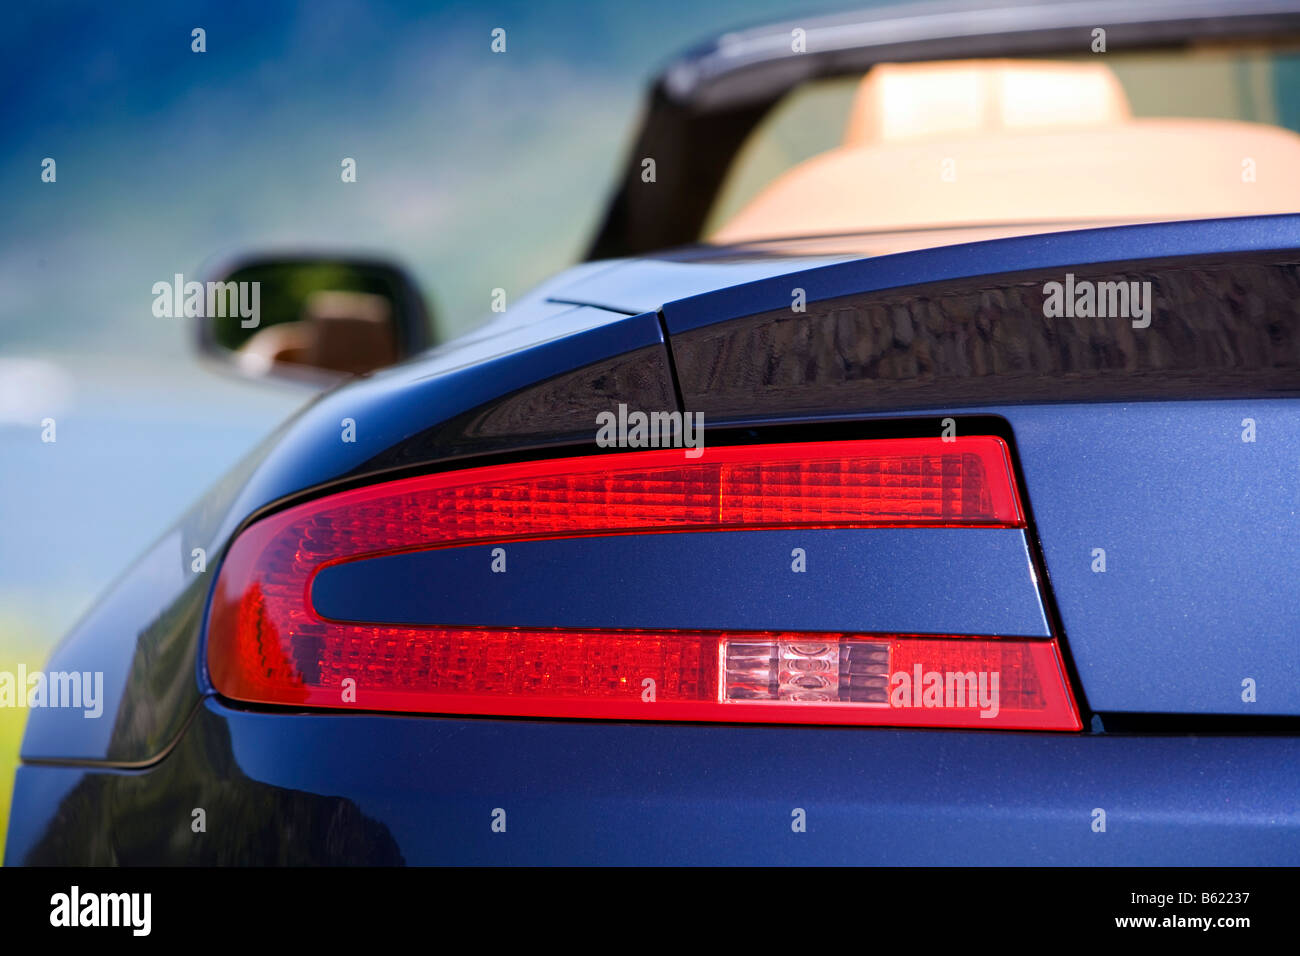 Aston Martin V8 Vantage sports car, detail Stock Photo